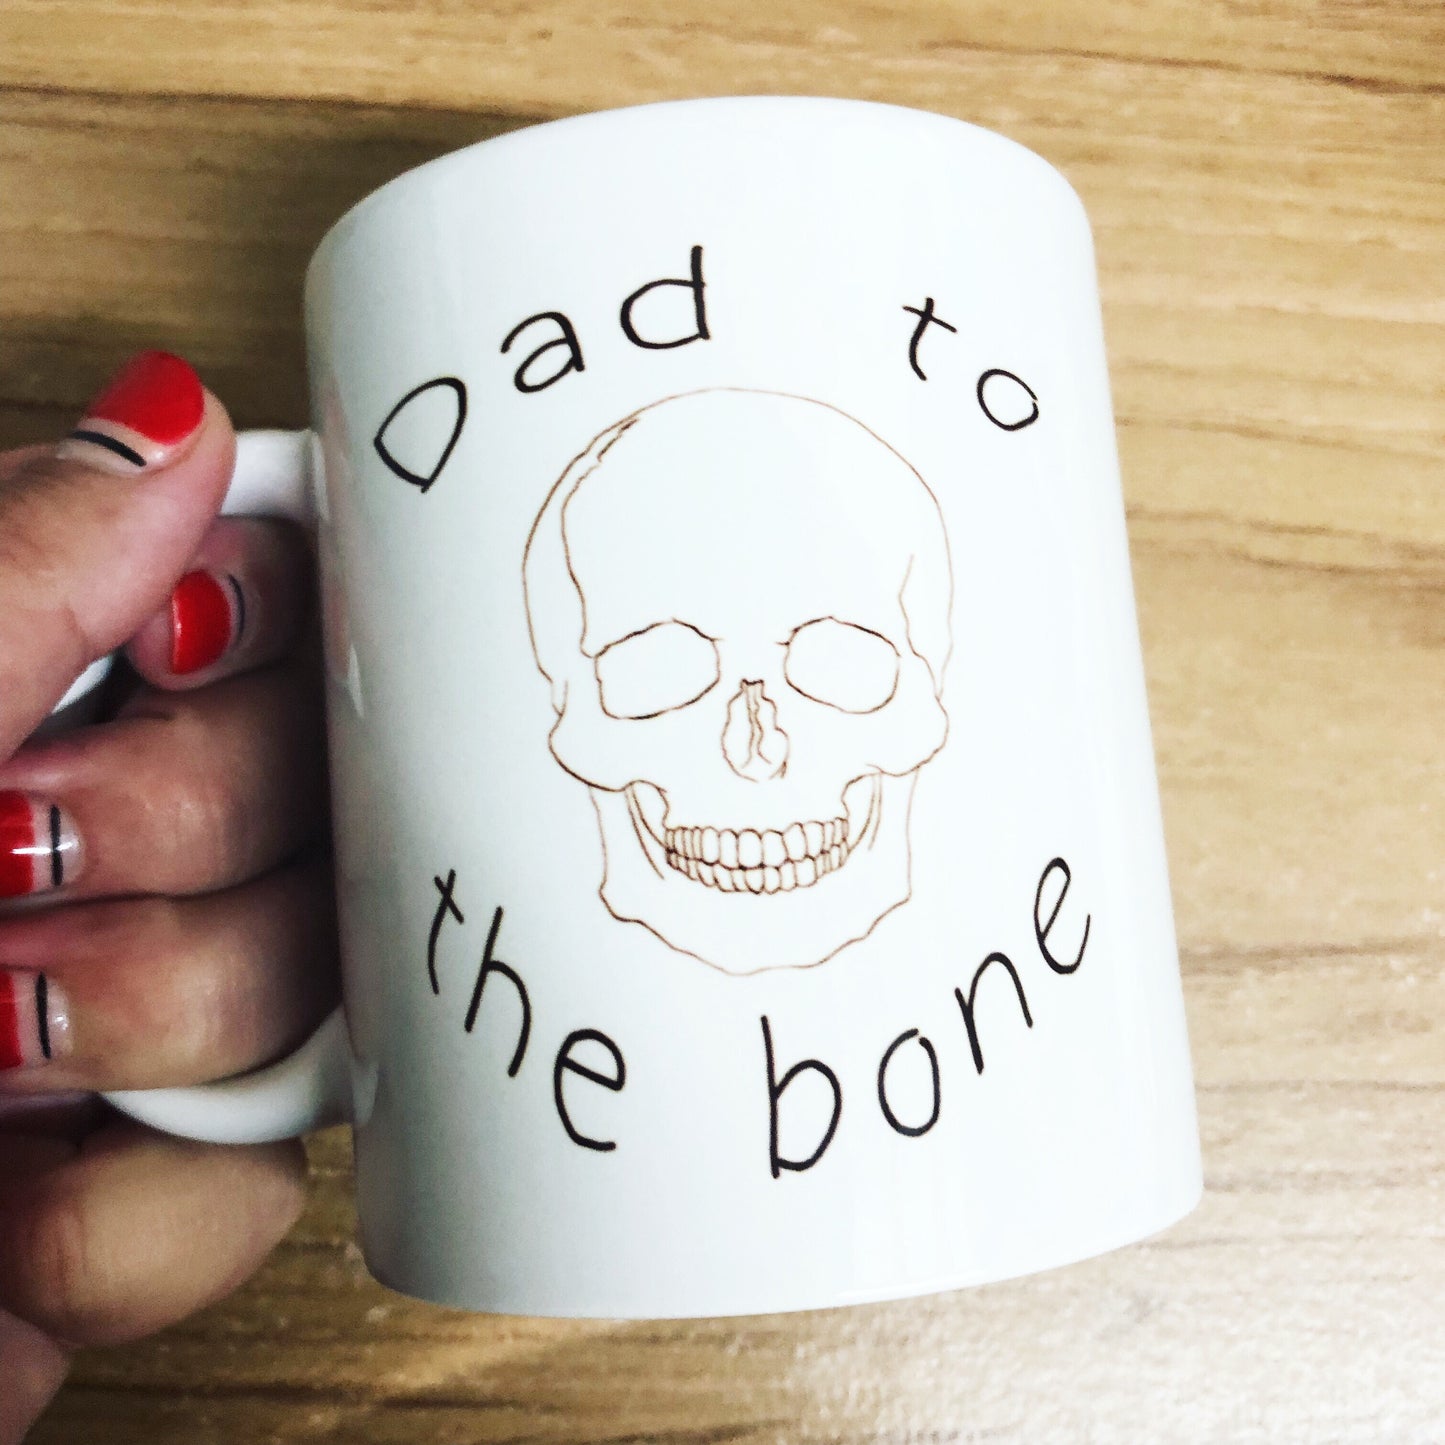 Dad to the Bone mug nz made 